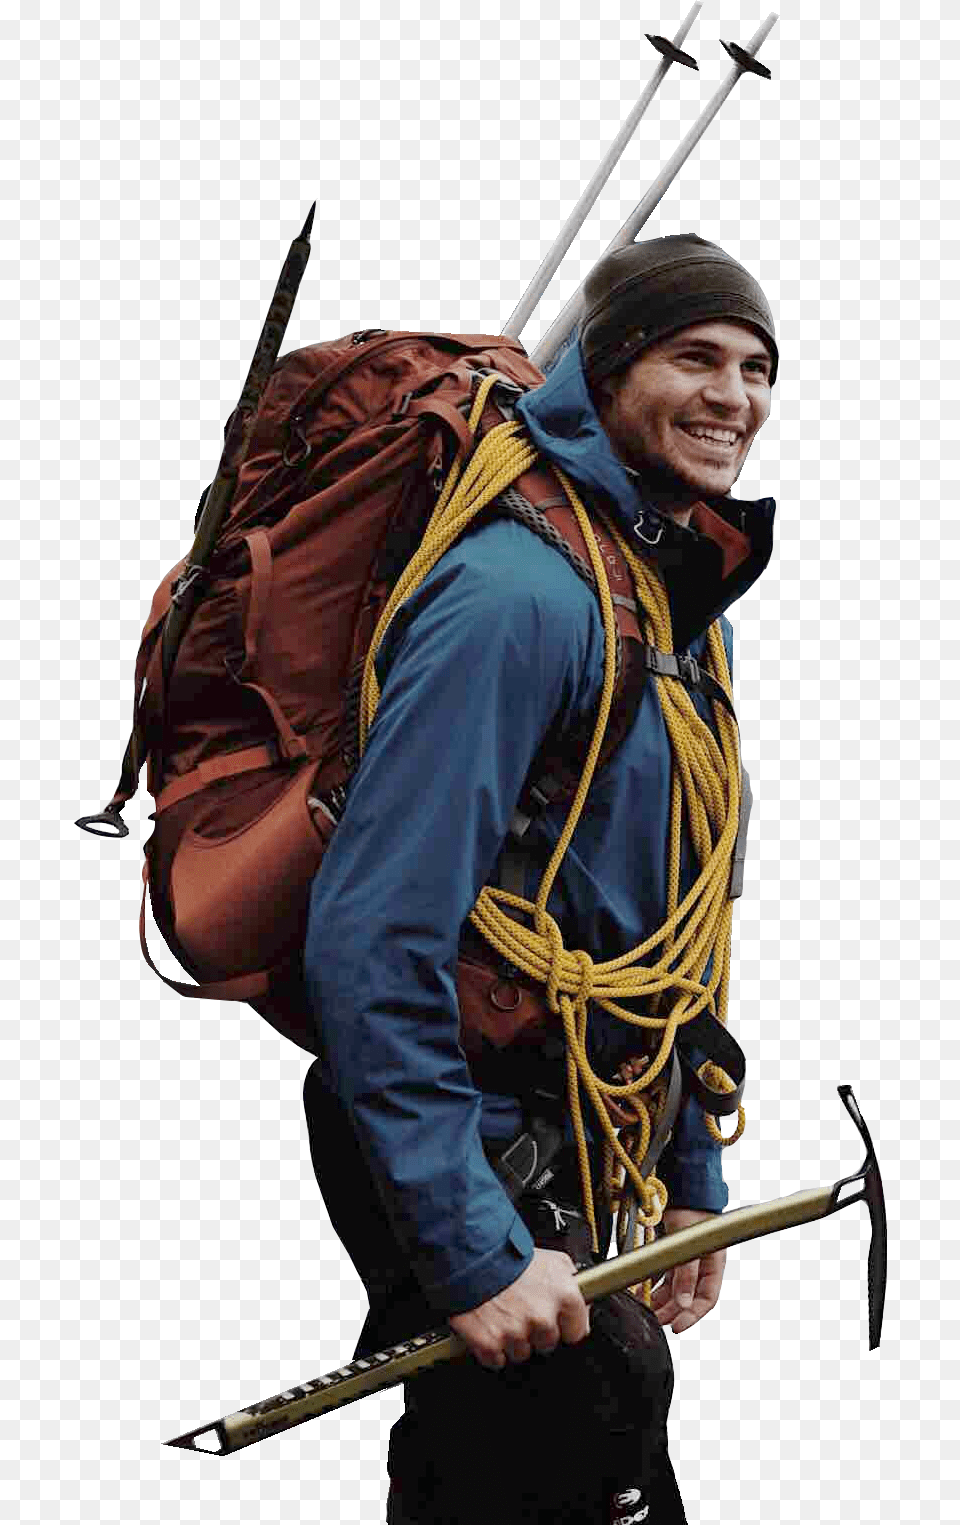 Hiking, Bag, Weapon, Sword, Backpack Png Image